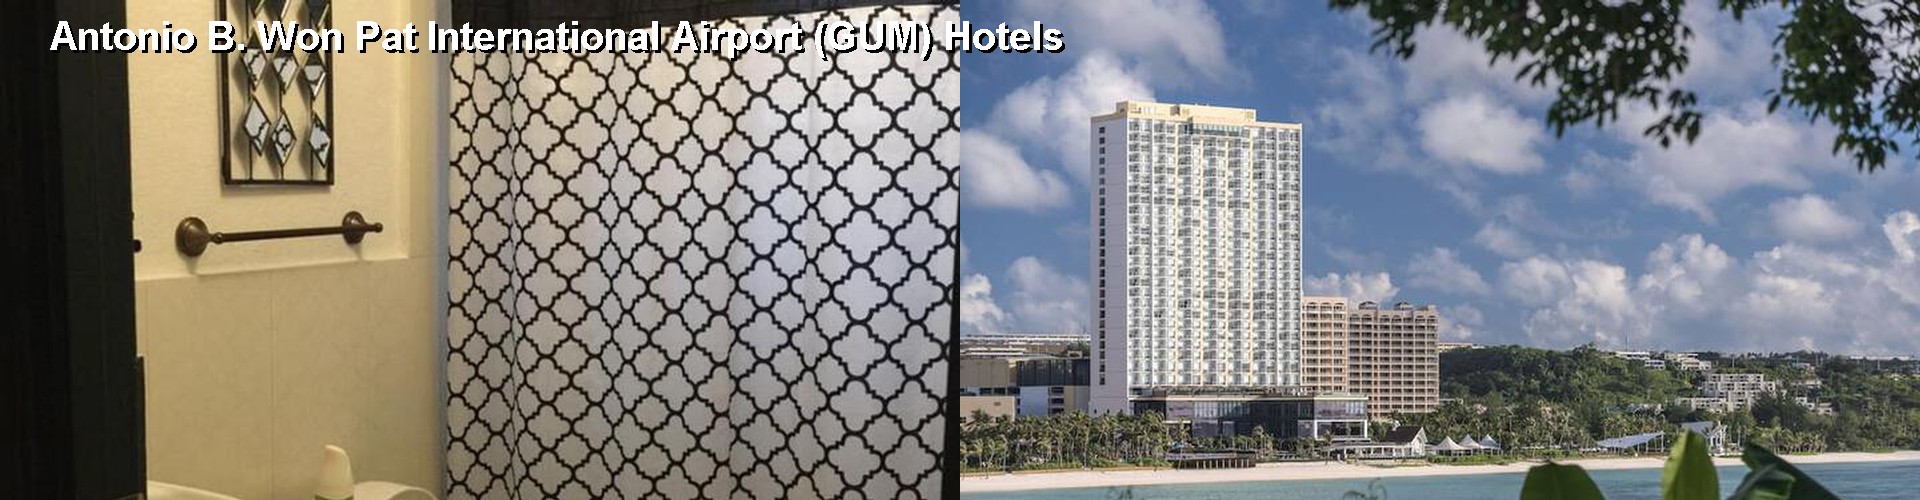 4 Best Hotels near Antonio B. Won Pat International Airport (GUM)